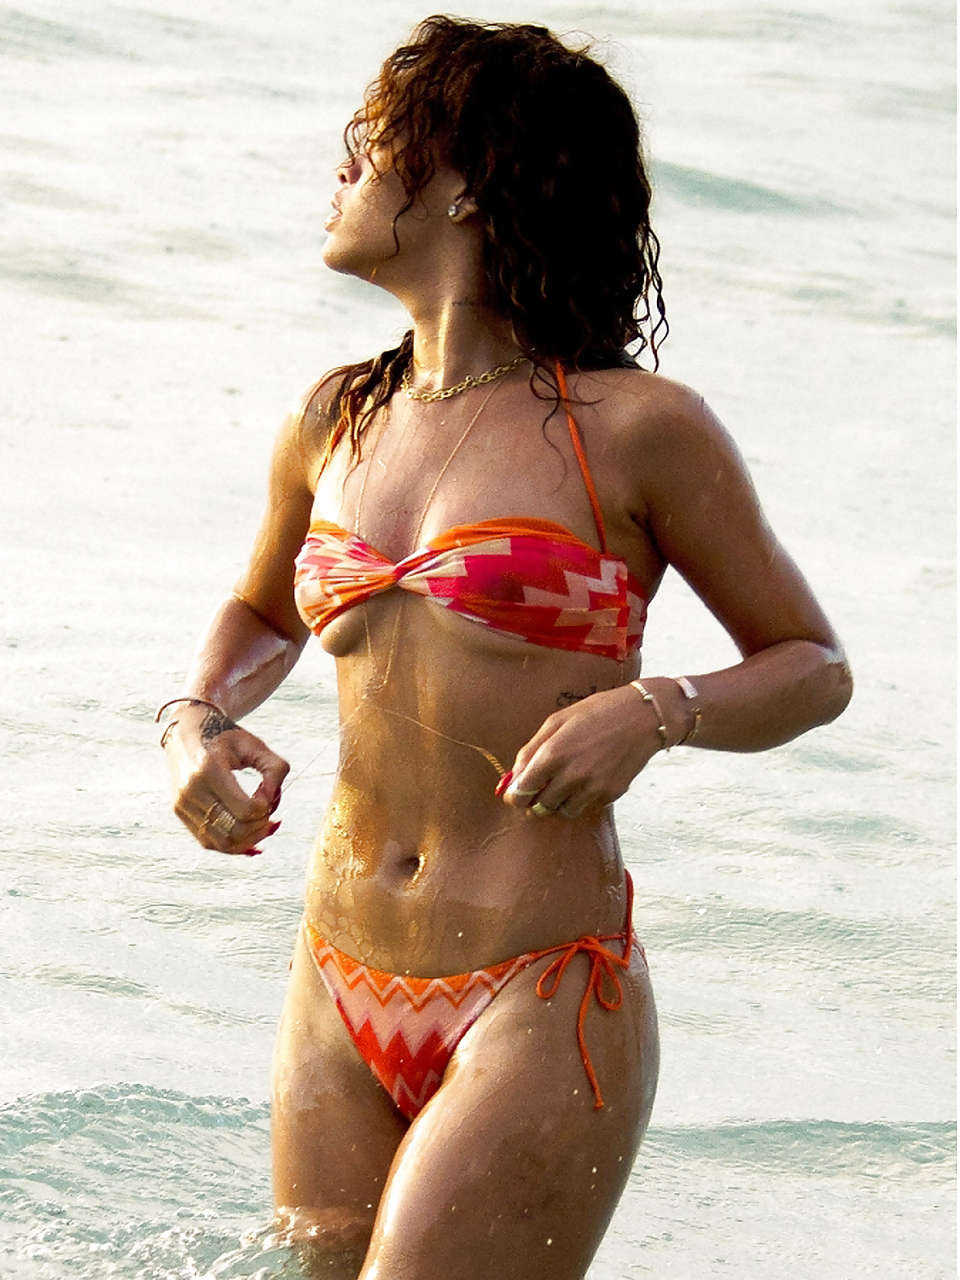 Rihanna looking sexy and cute in skimpy bikini on beach #75276421